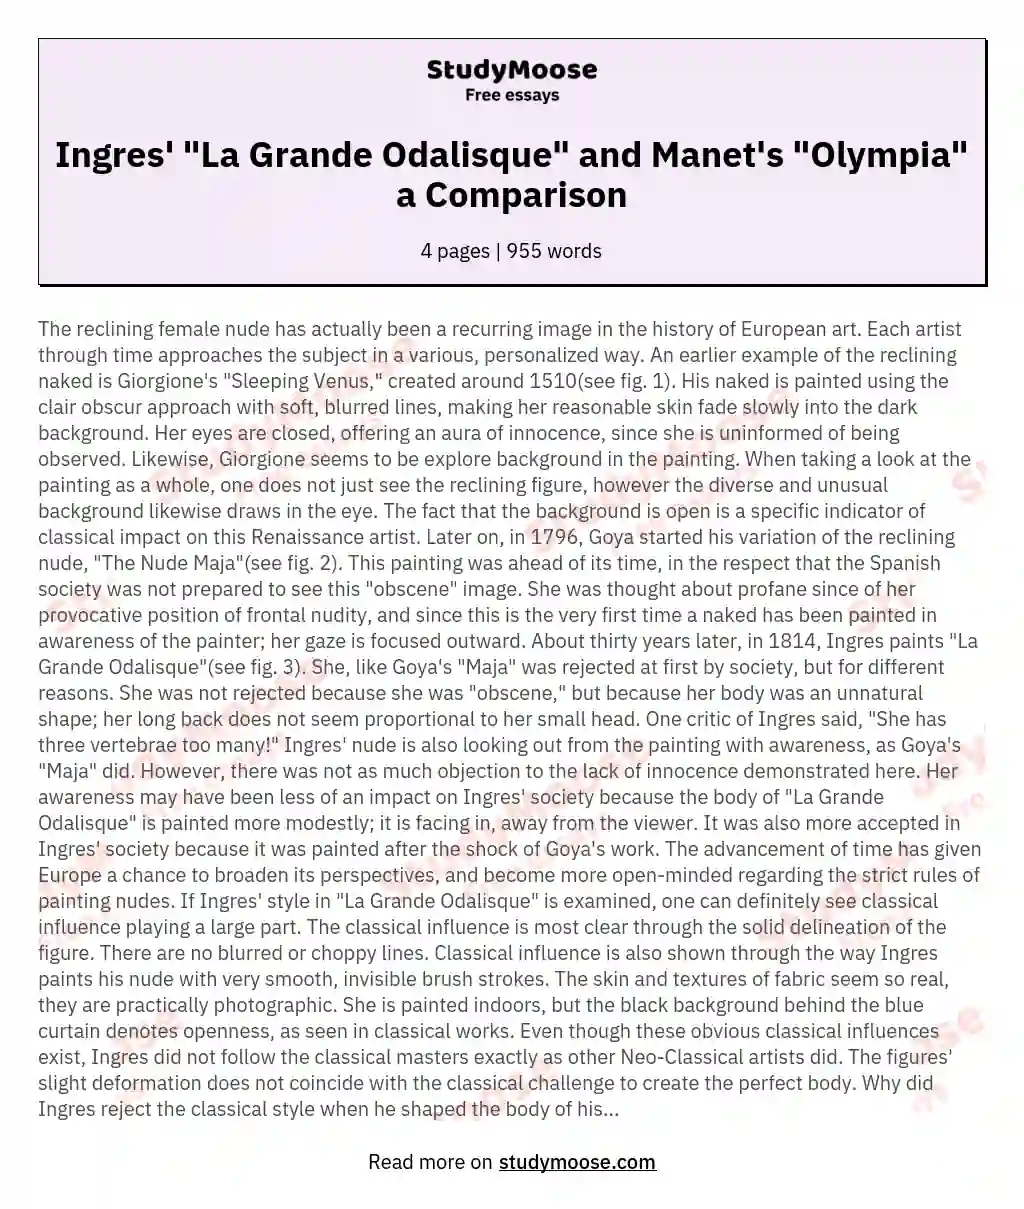 Ingres' "La Grande Odalisque" and Manet's "Olympia" a Comparison essay